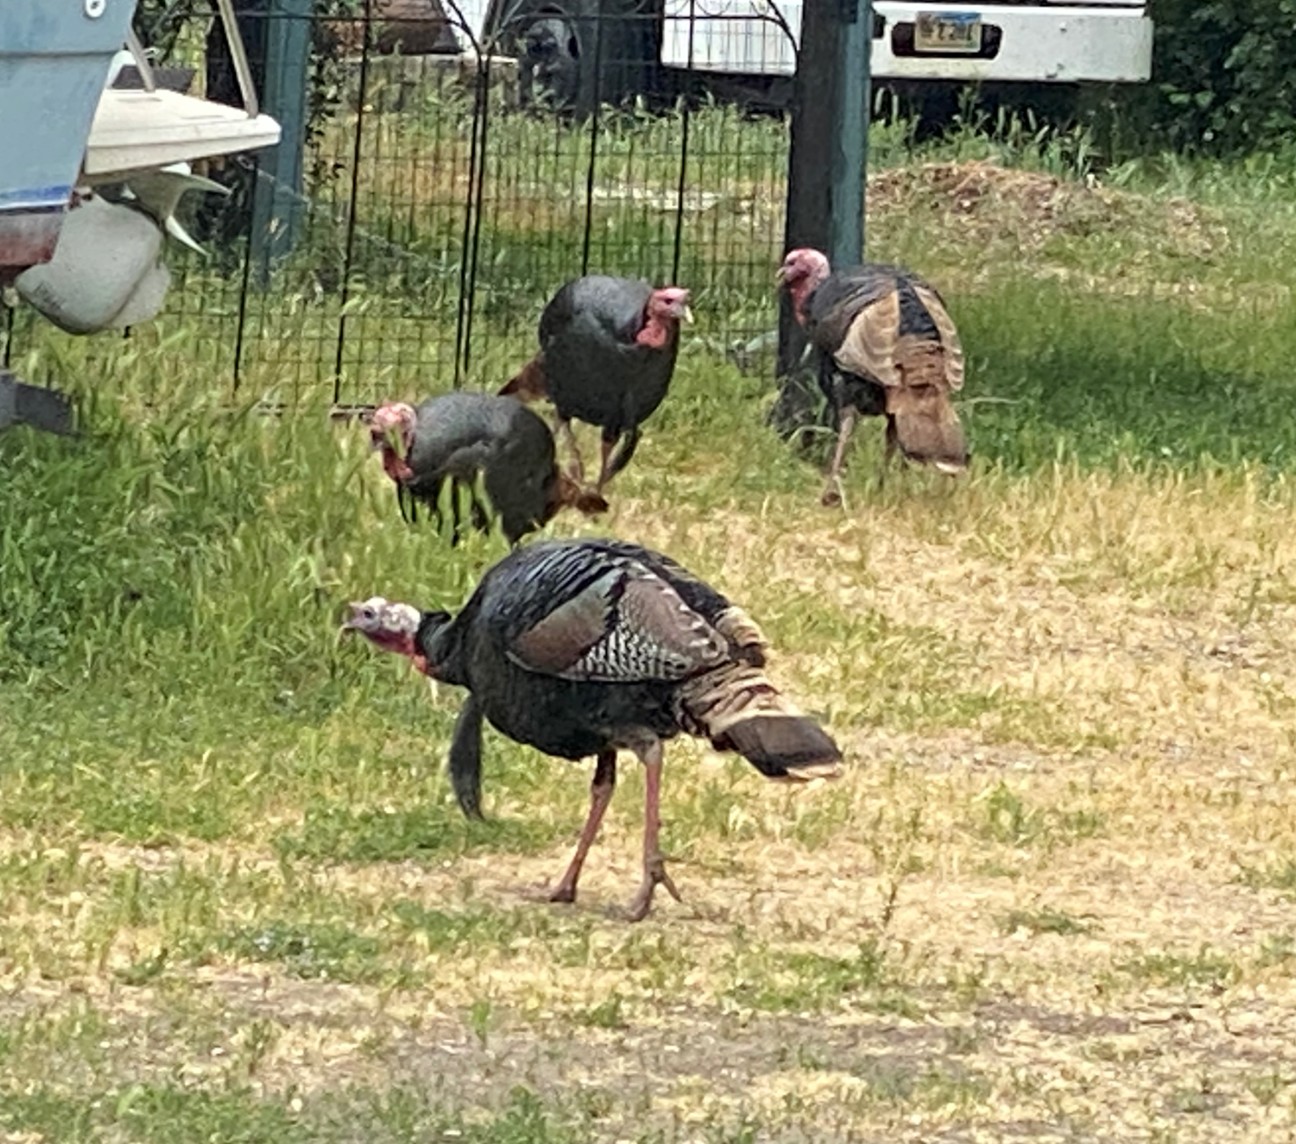 Wild Turkeys taking over in California Central Valley communities